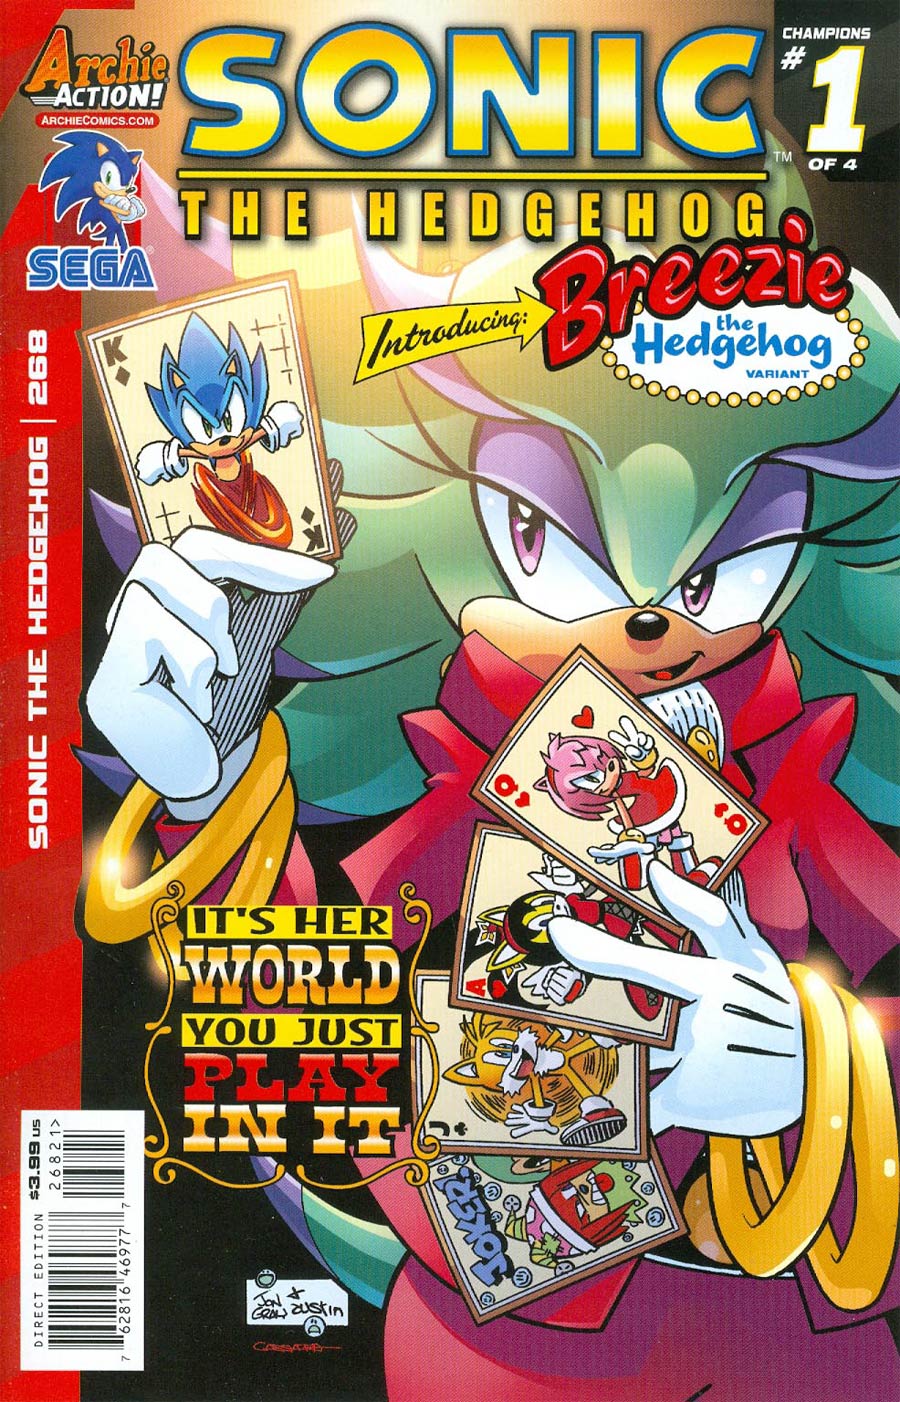 Sonic The Hedgehog Vol 2 #268 Cover B Variant Breezie The Hedgehog Cover